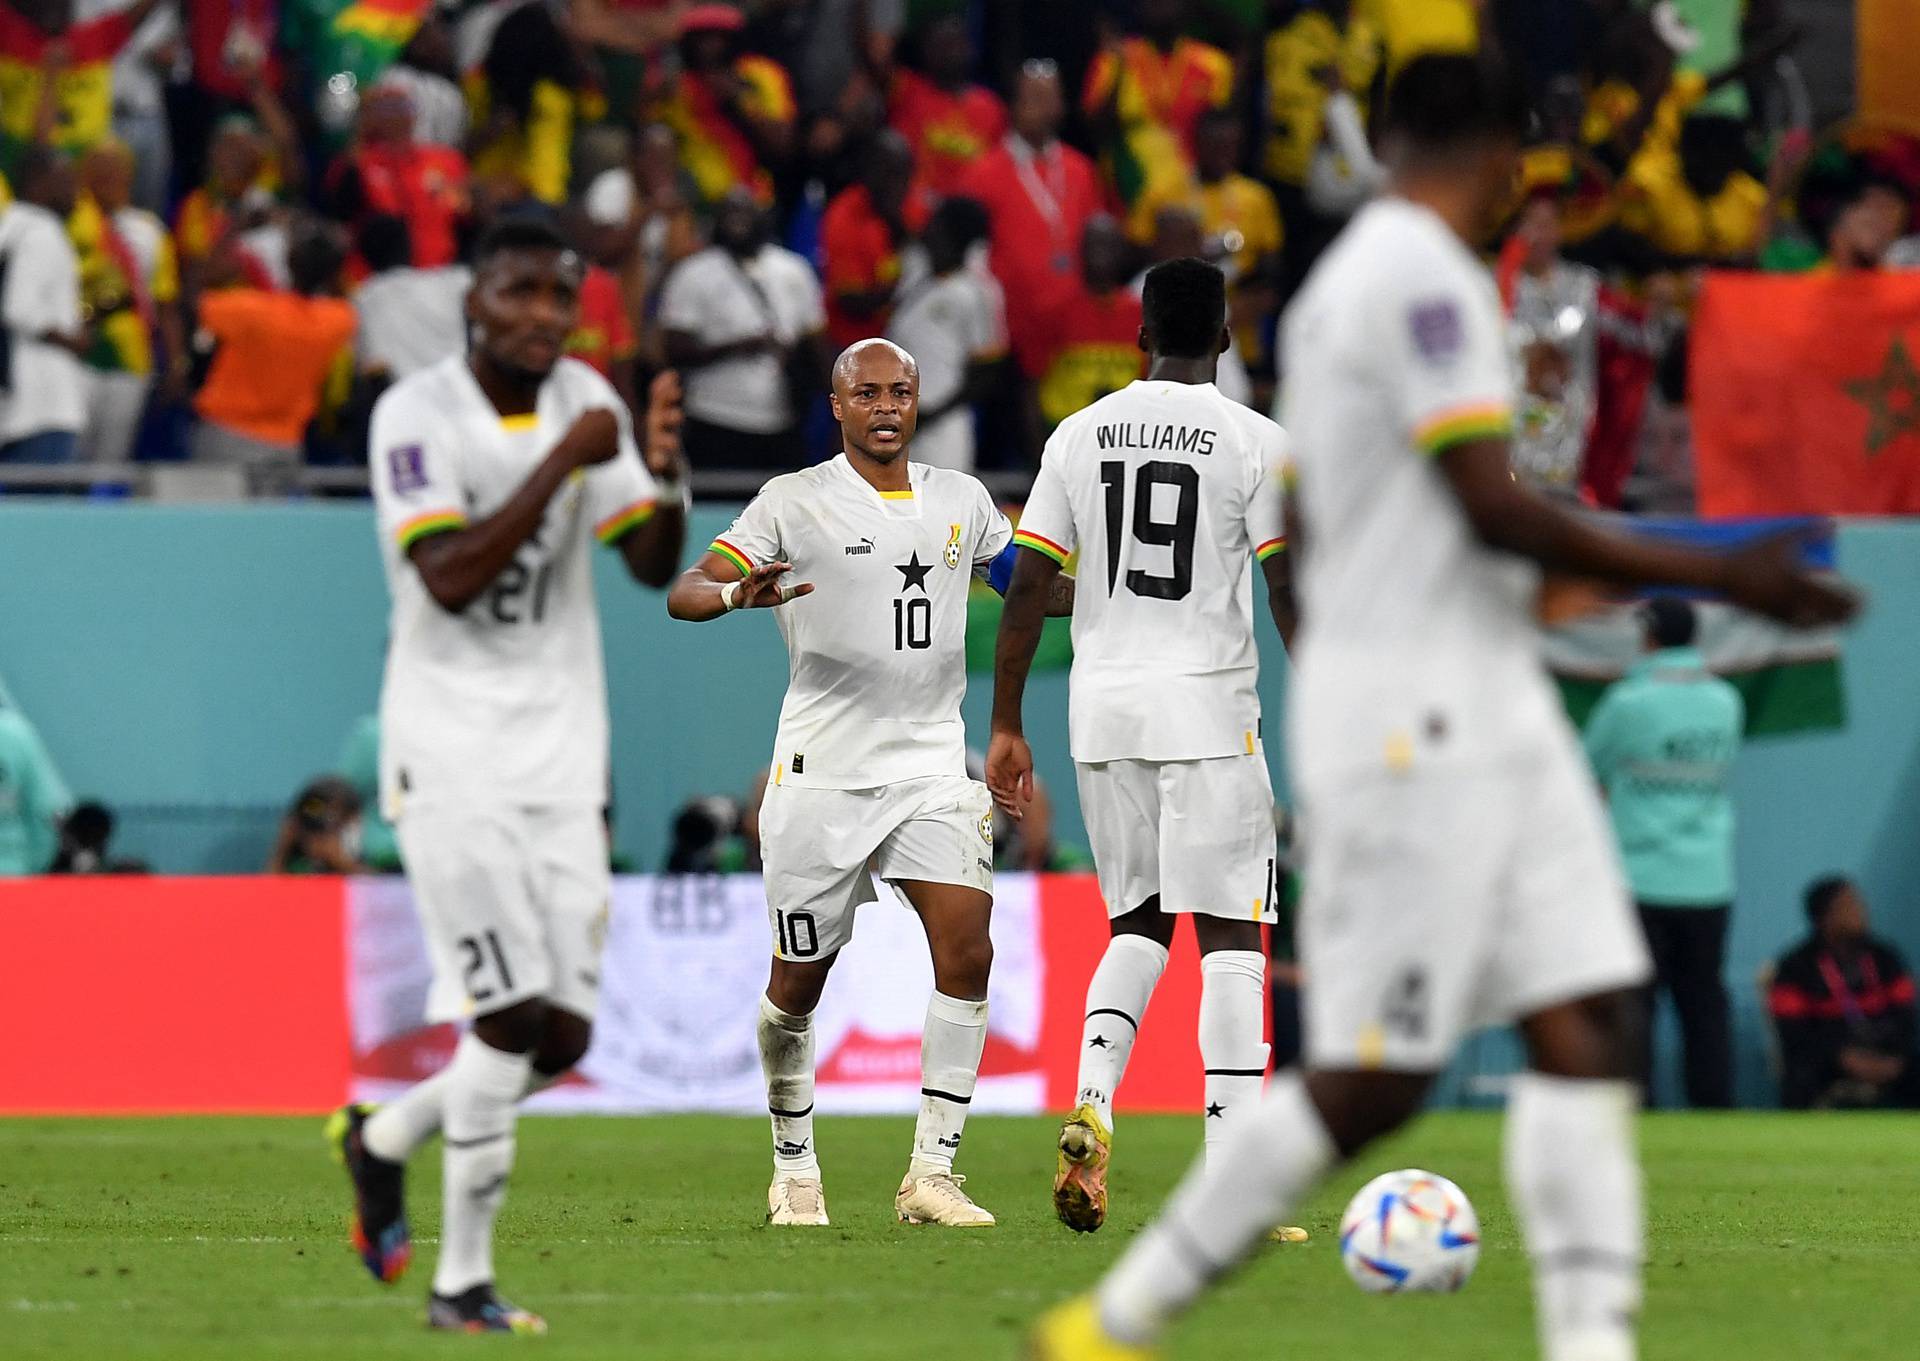 FIFA World Cup Qatar 2022 - Group H - Portugal v Ghana